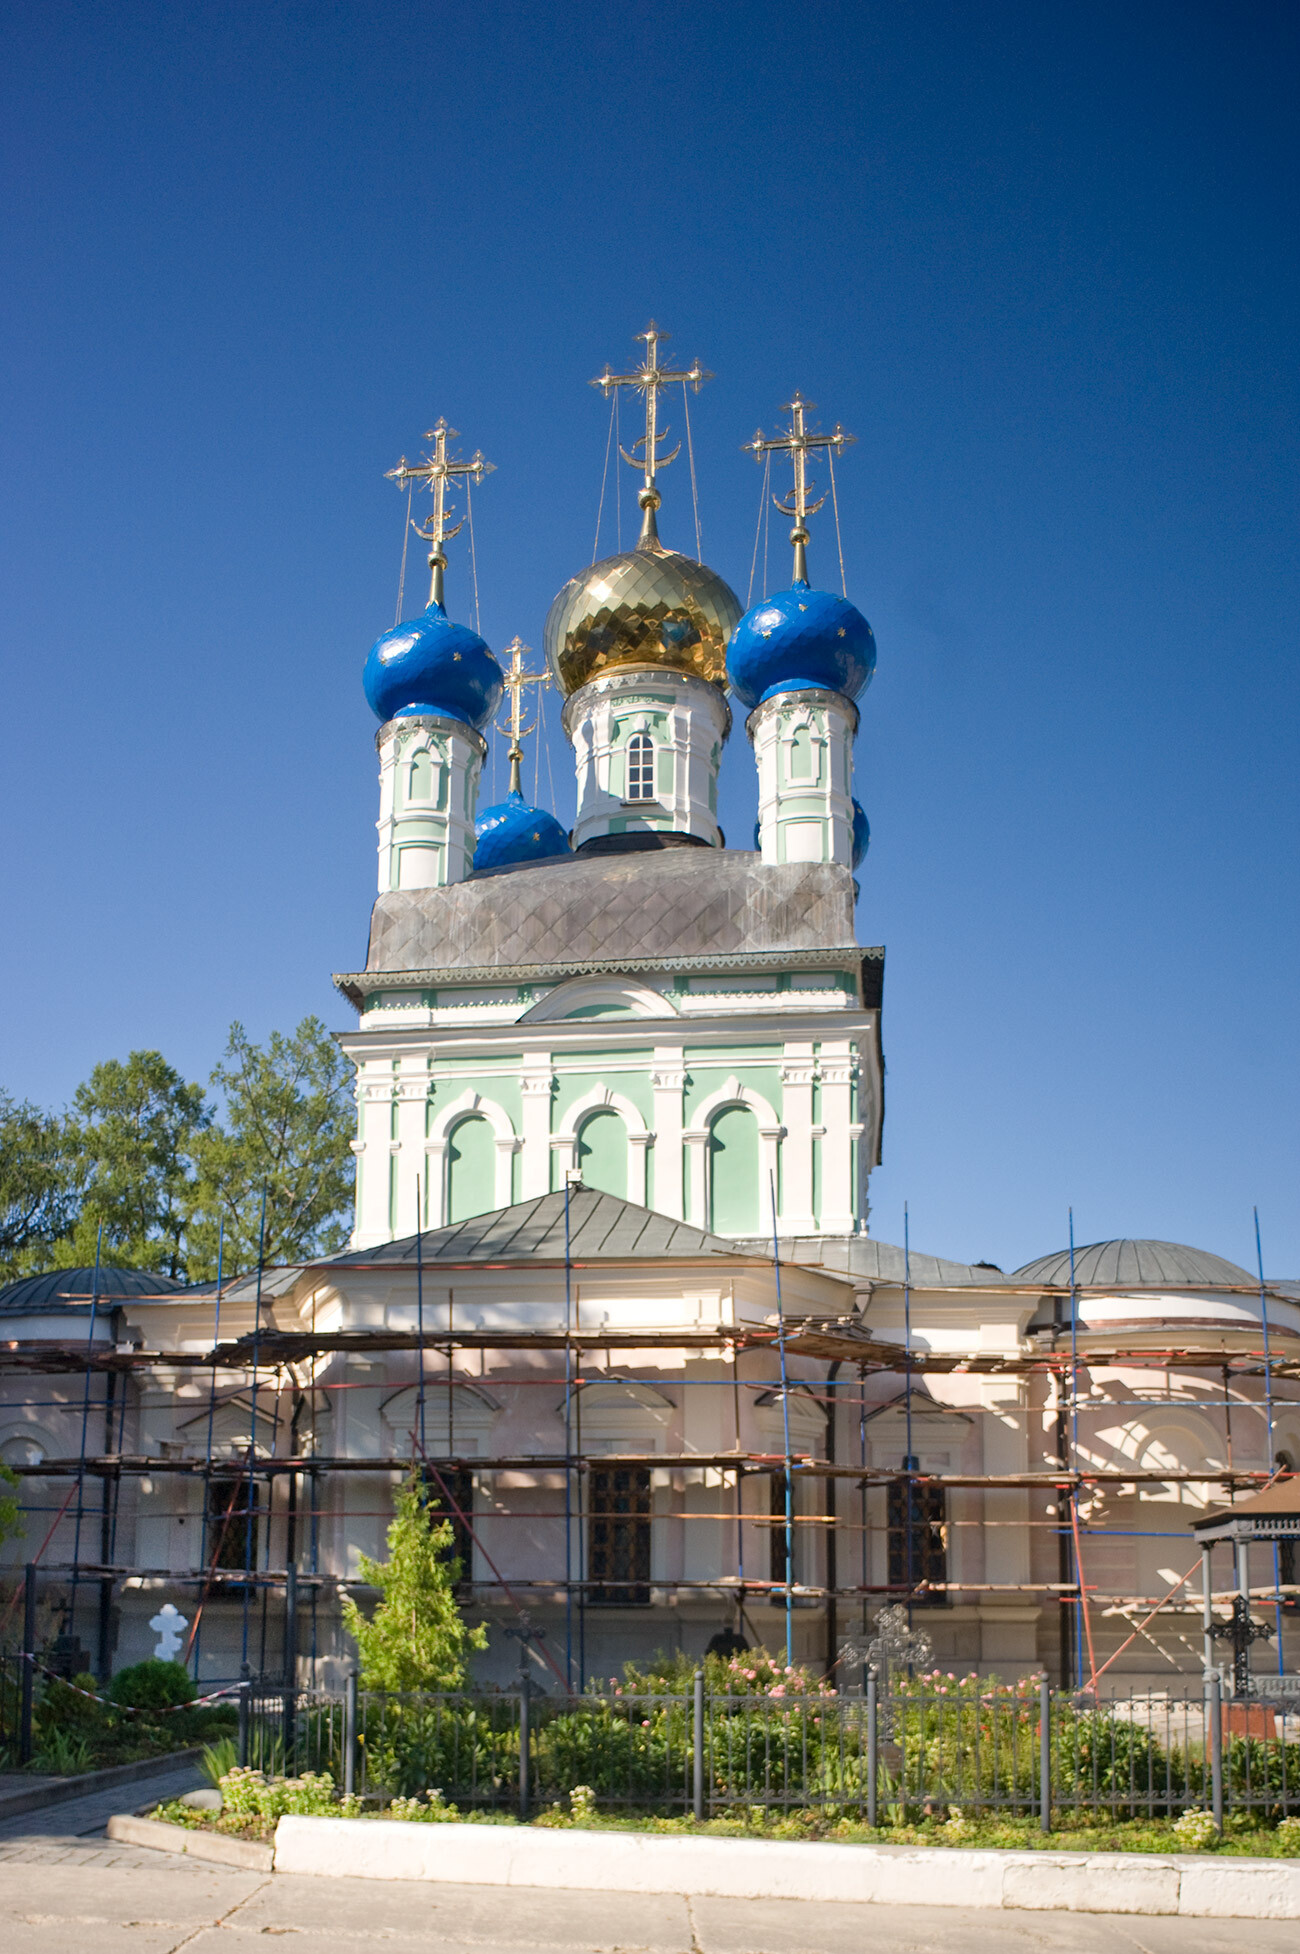 Optina Pustyn, Monastery of the Presentation. Cathedral of the Presentation of the Virgin Mary, east view. August 23, 2014